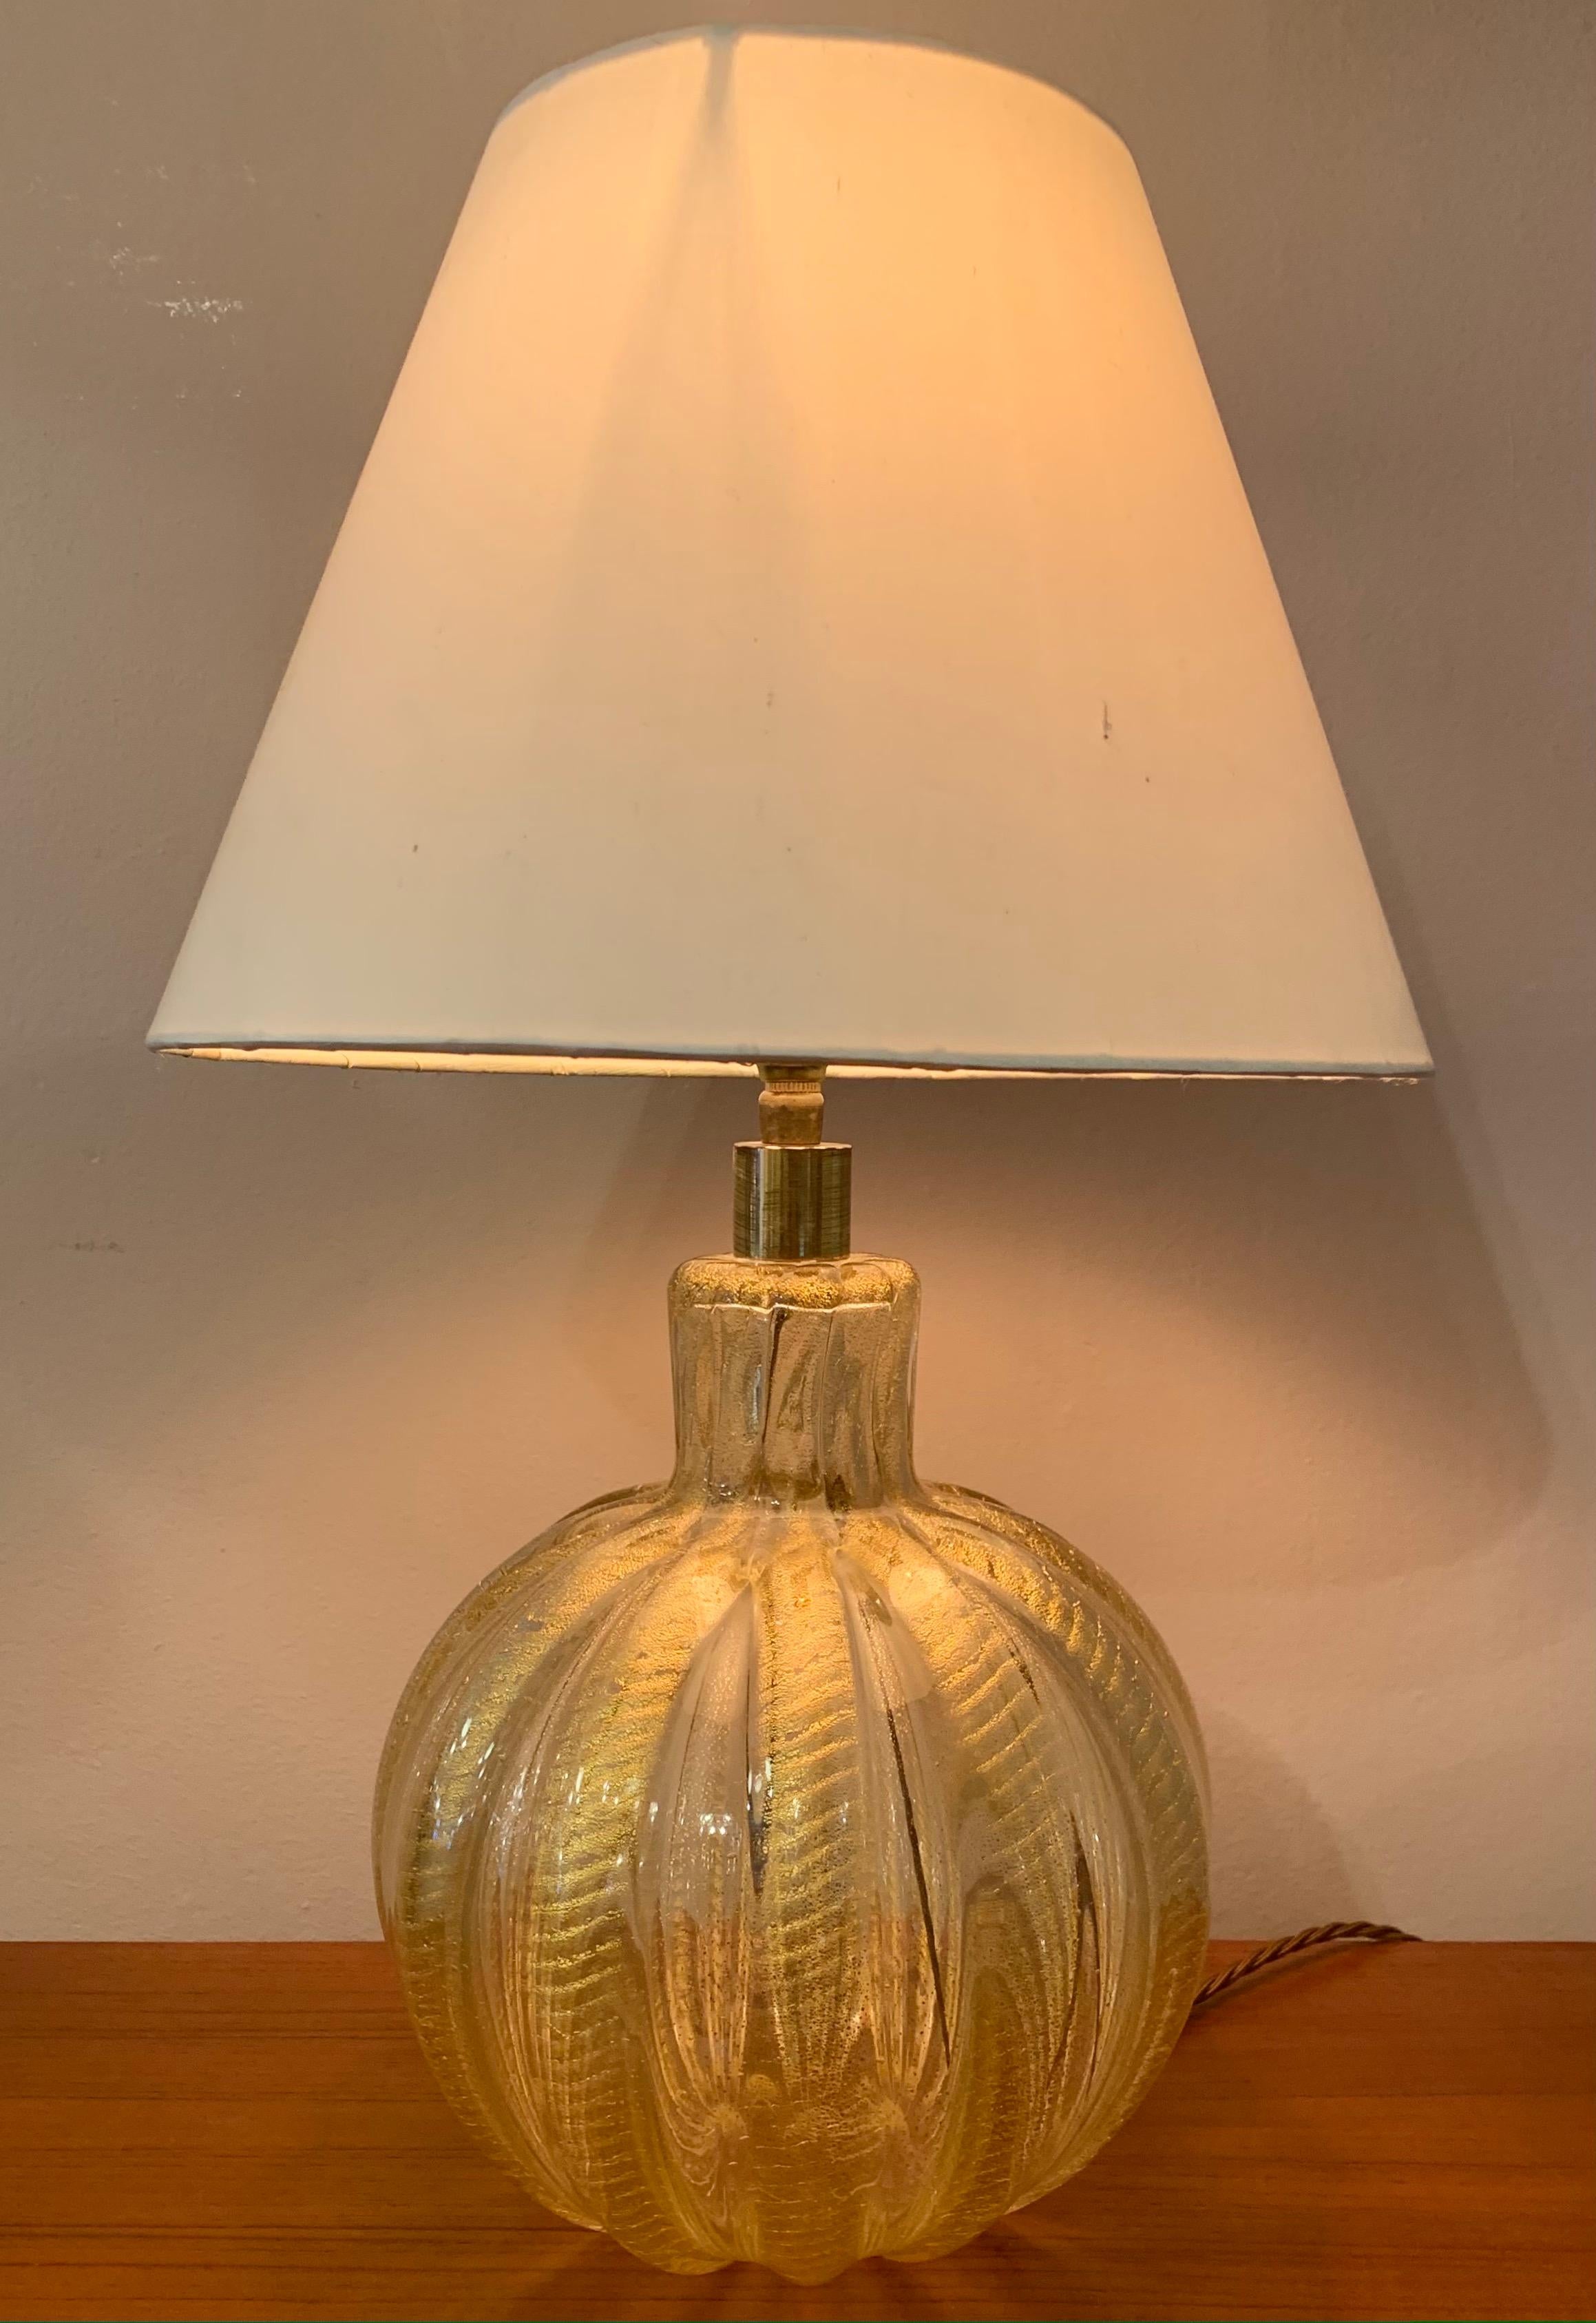 20th Century 1950s Italian Barovier Gold Murano Glass Table Lamp